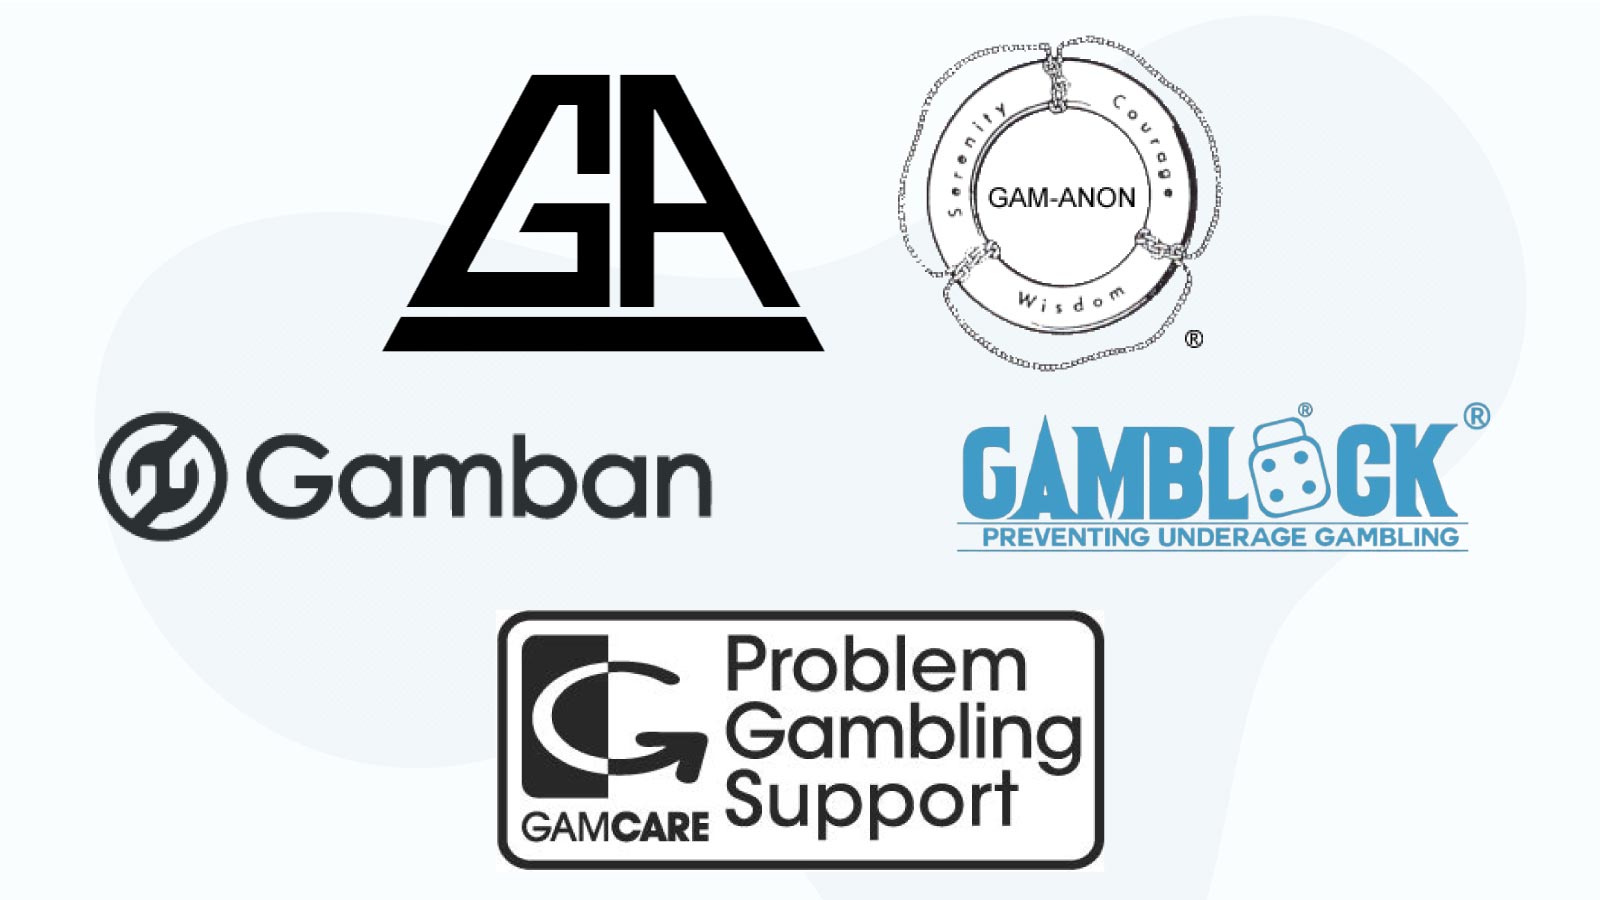 Responsible Gambling Organisations in Ireland